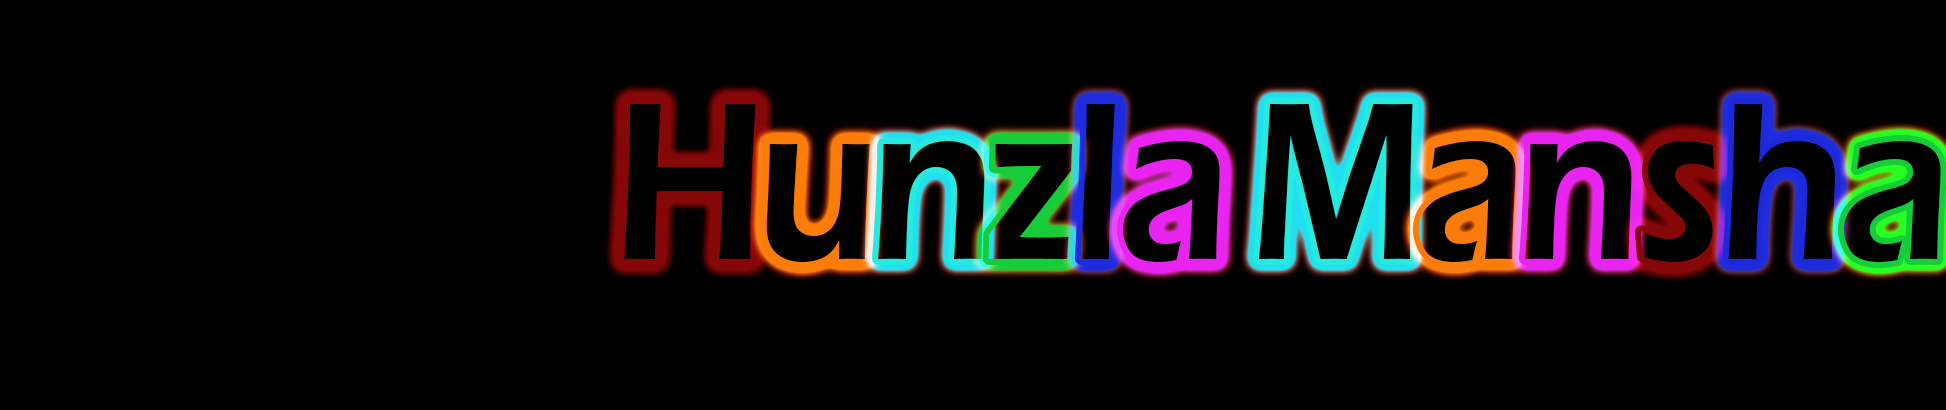 Hunzla Mansha's profile banner